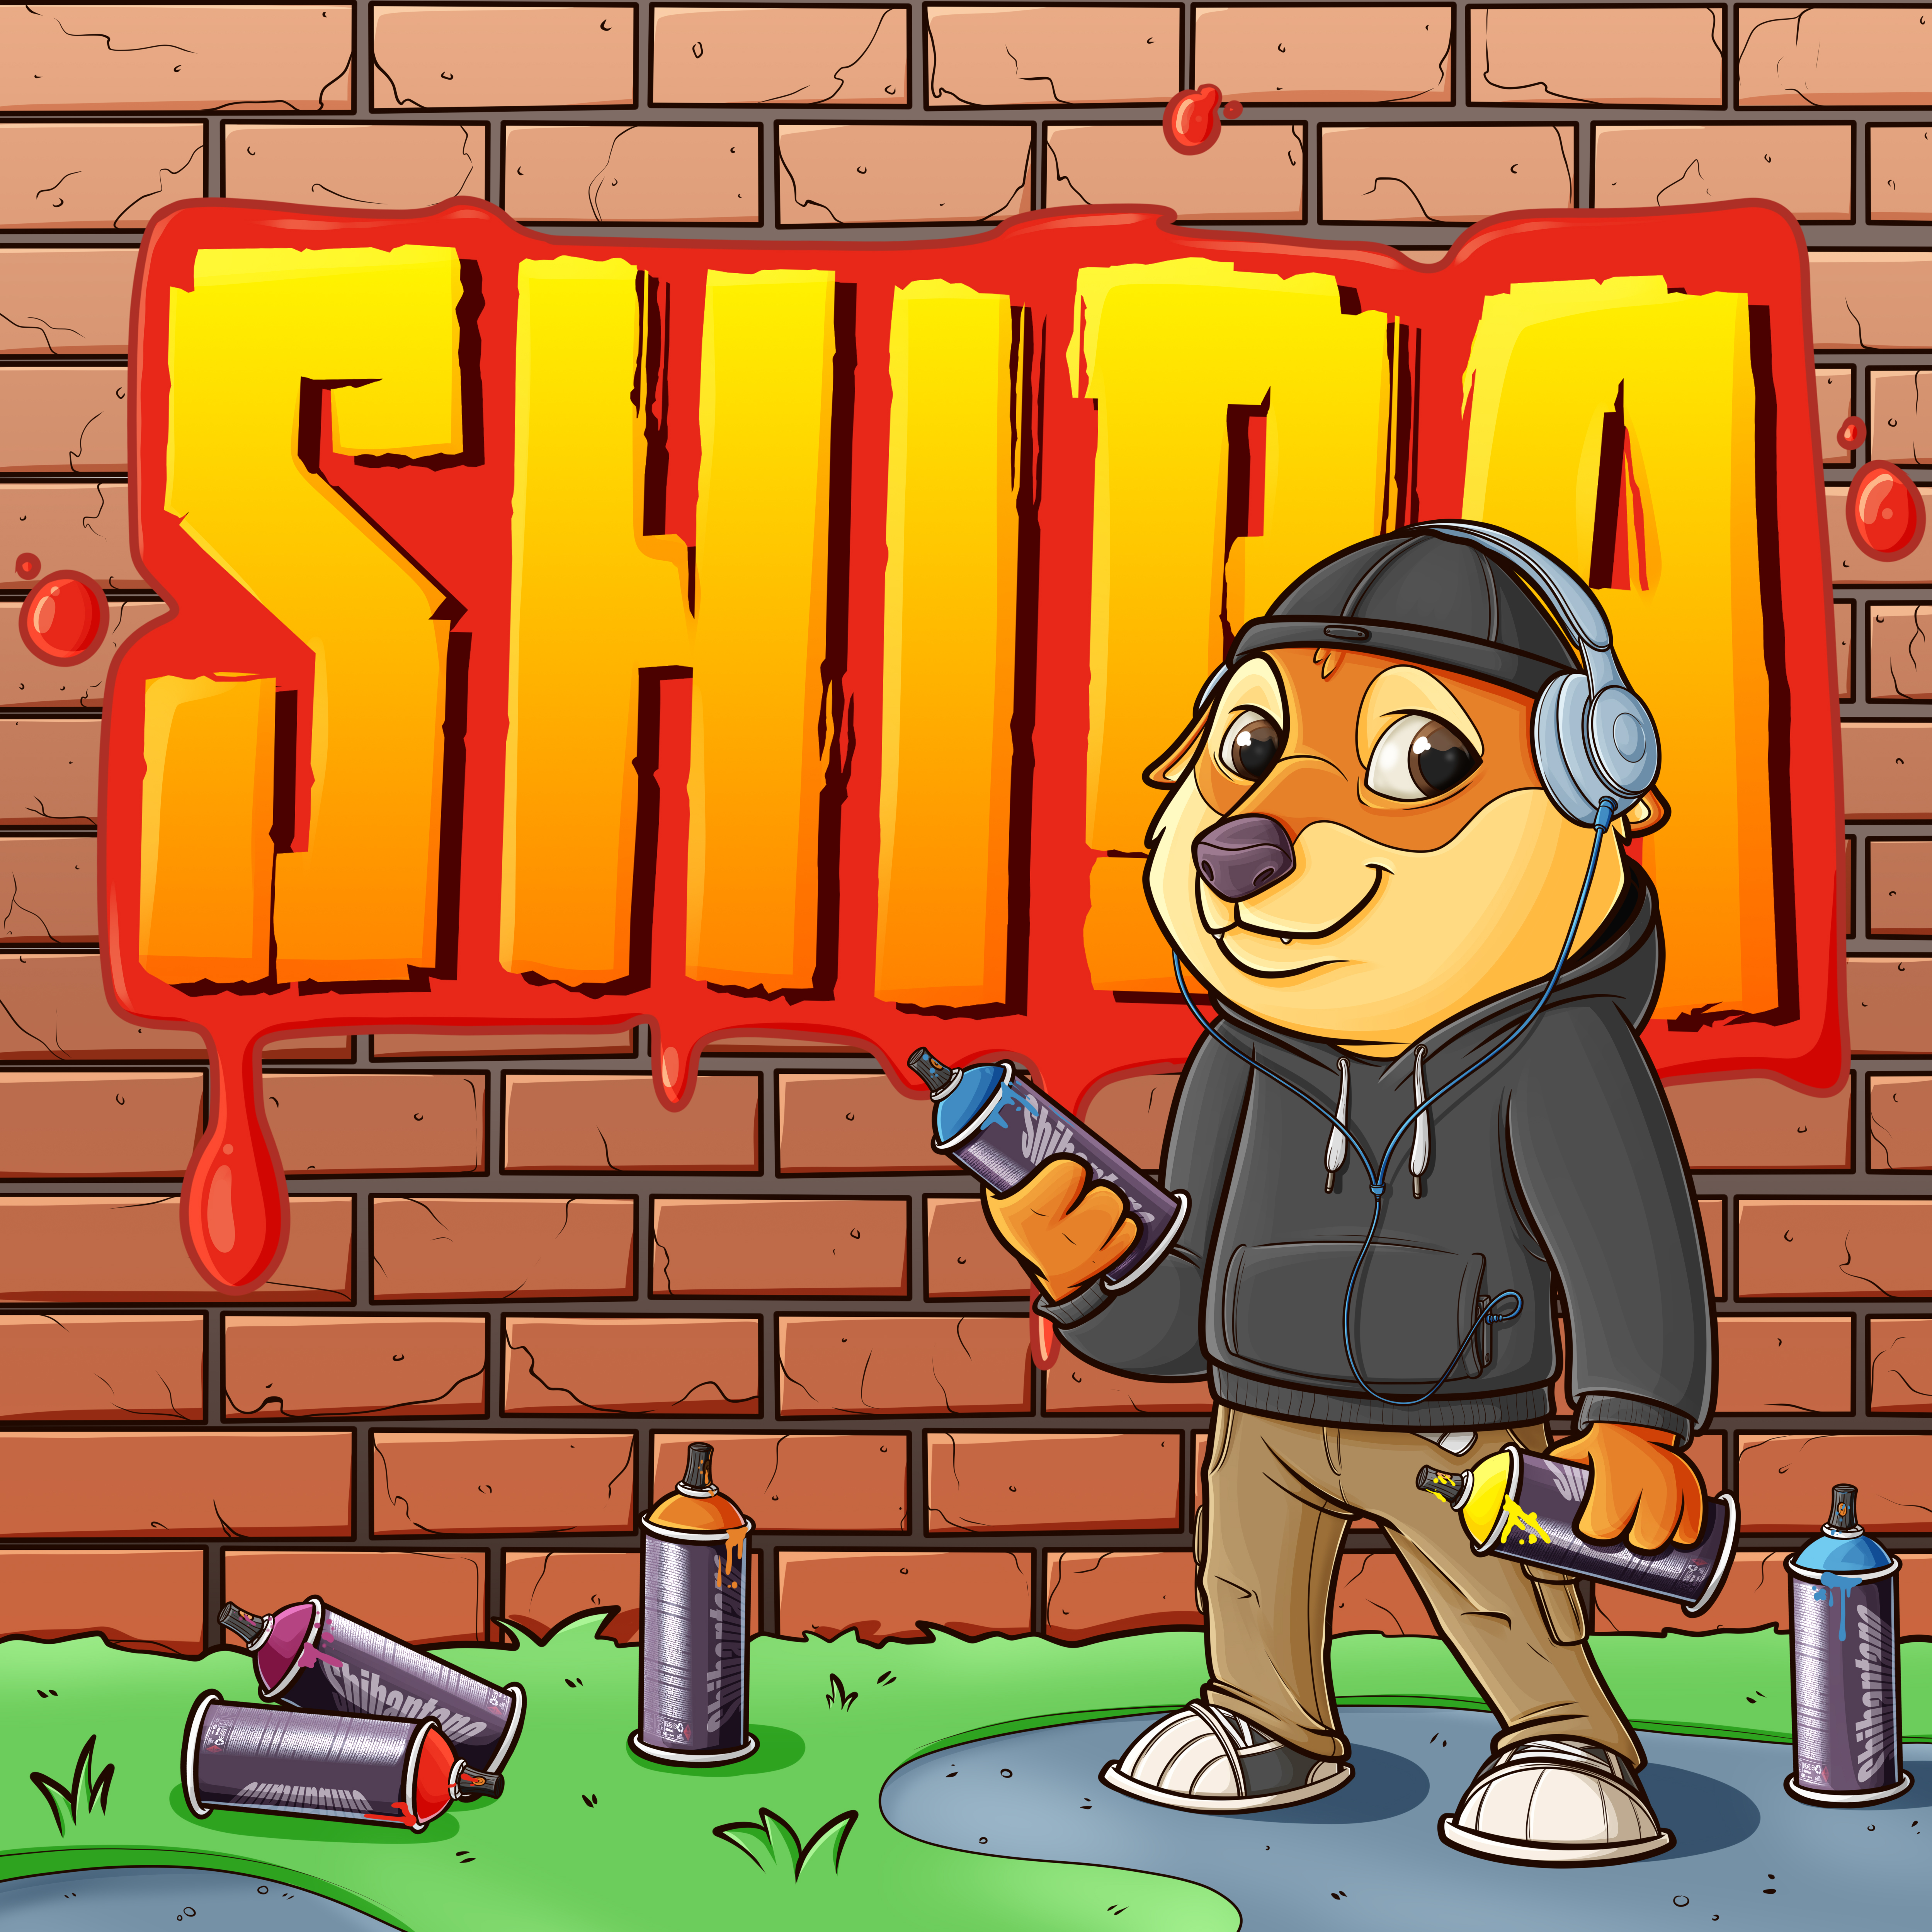 Shiba Graffiti